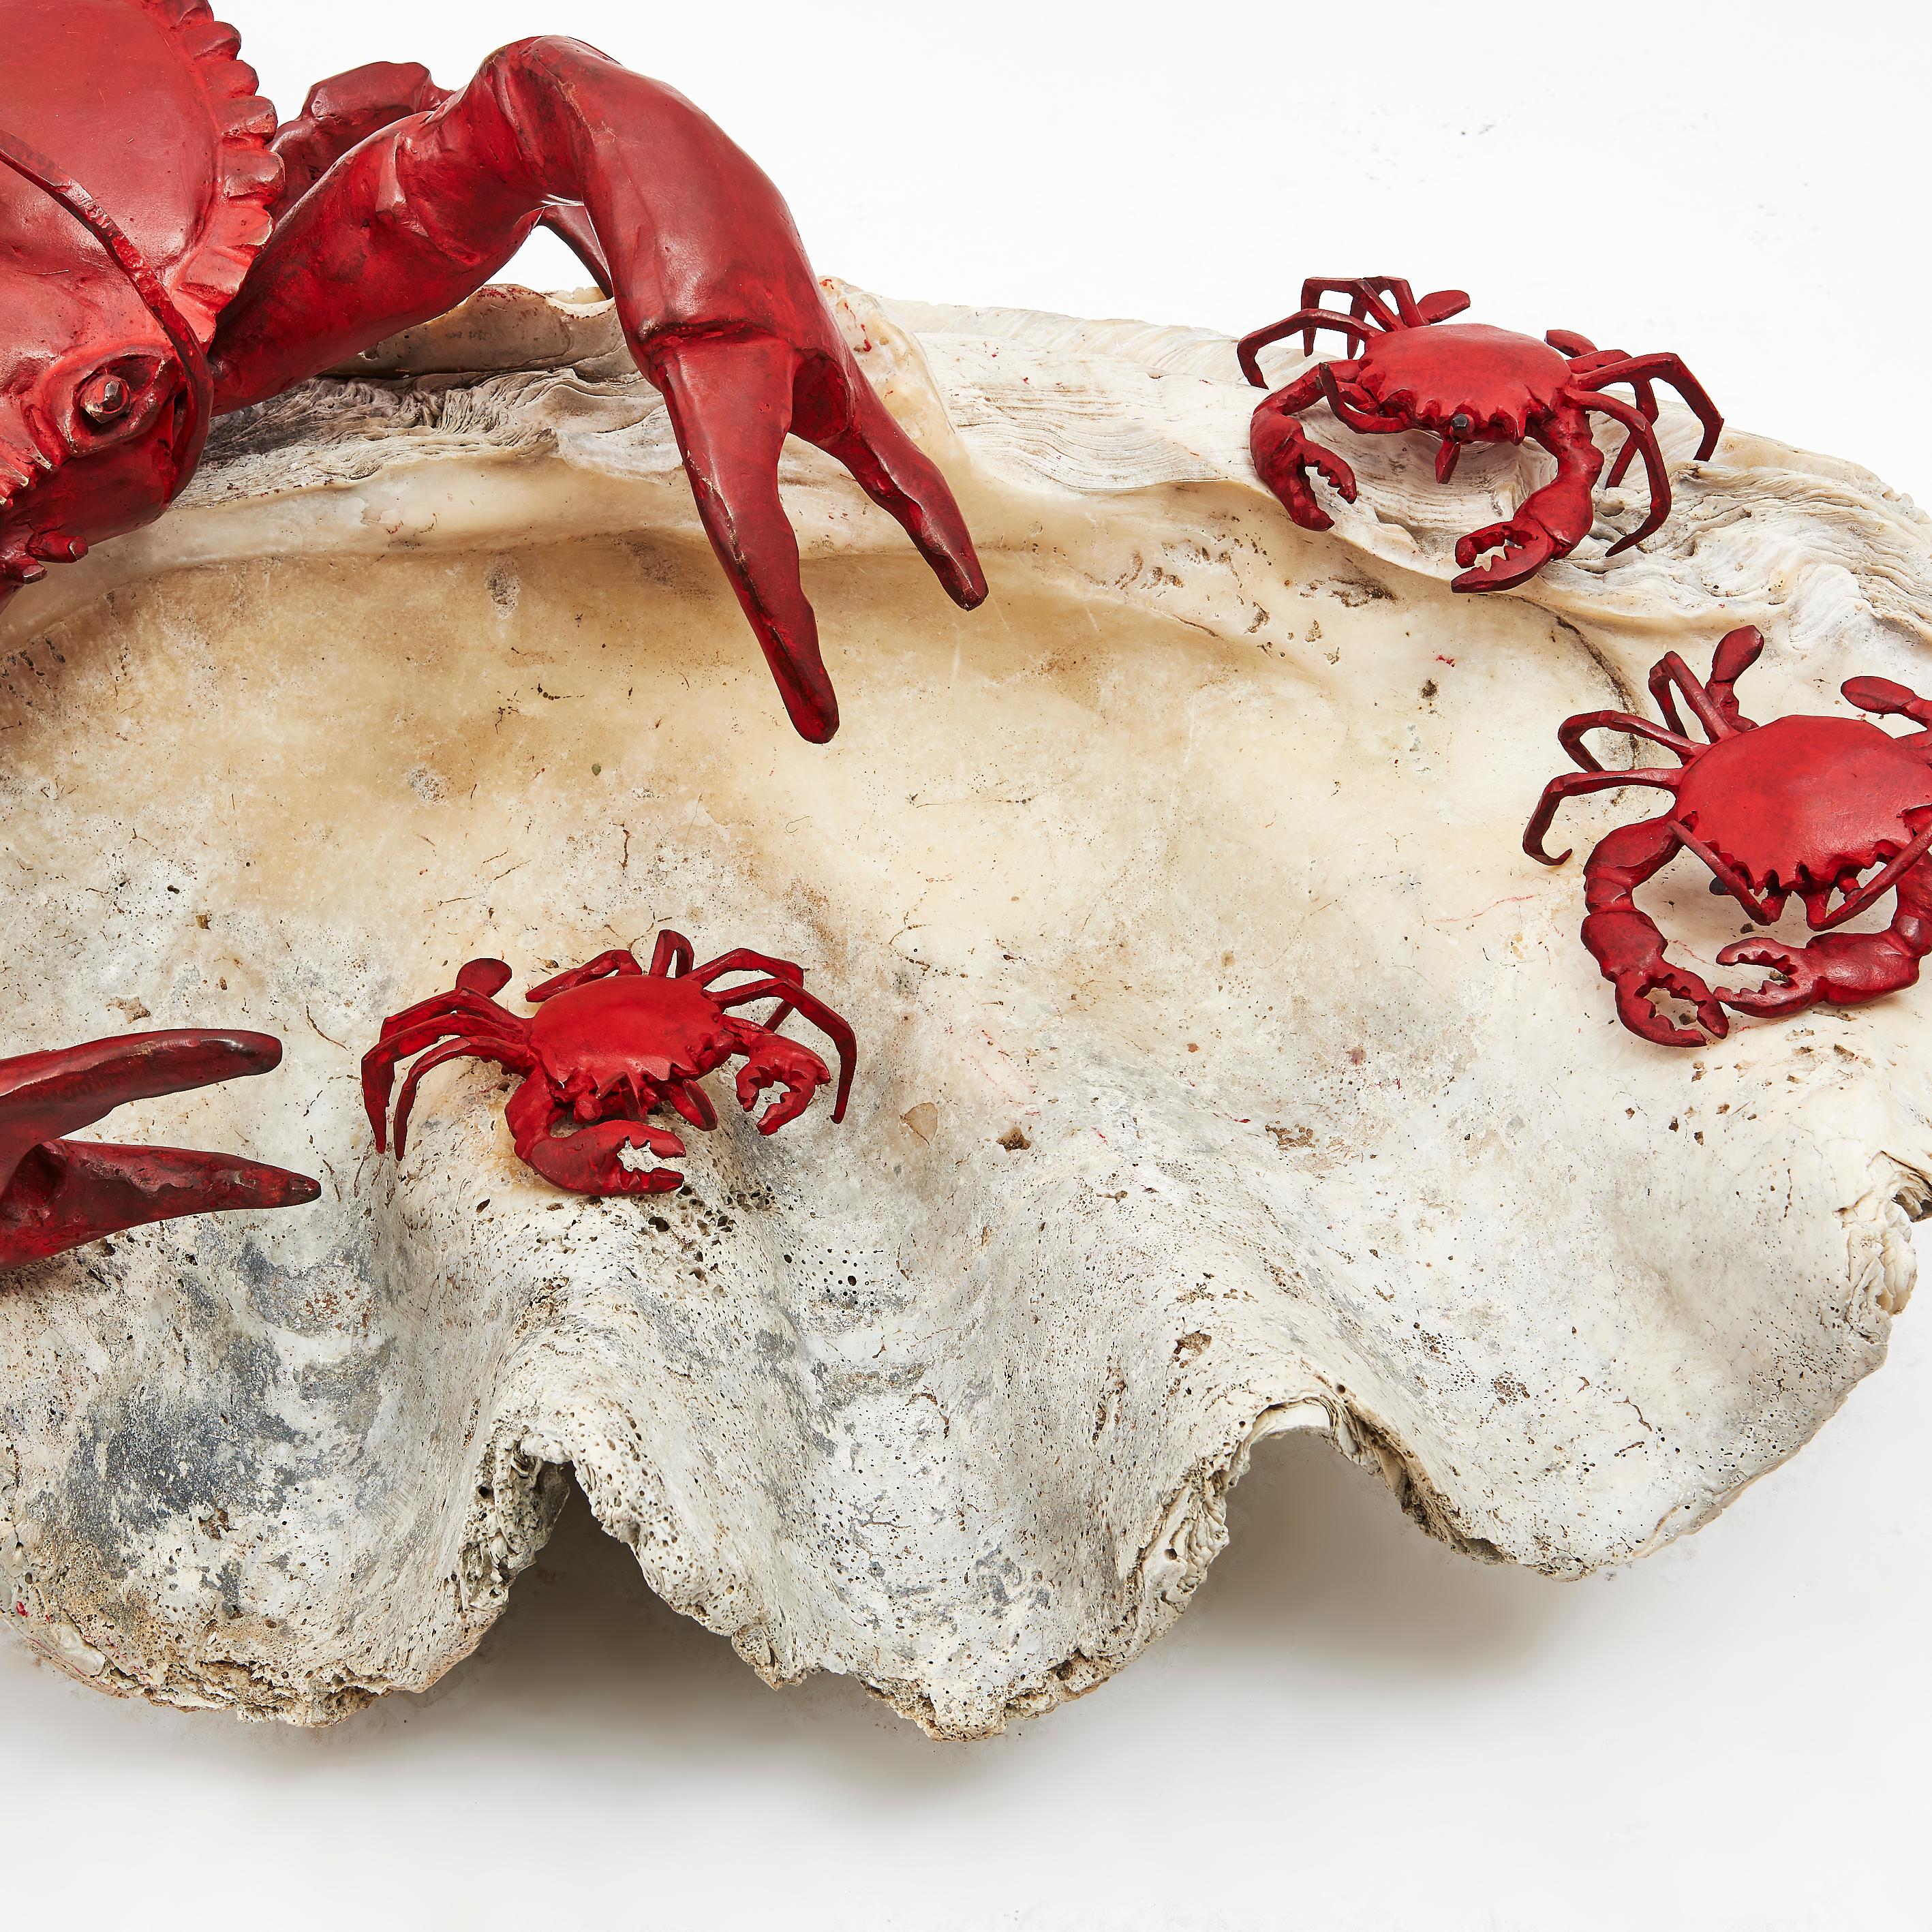 Bronze Antique Clam Shell Centre Piece with Paula Swinnen Crab Sculptures, 2019. 